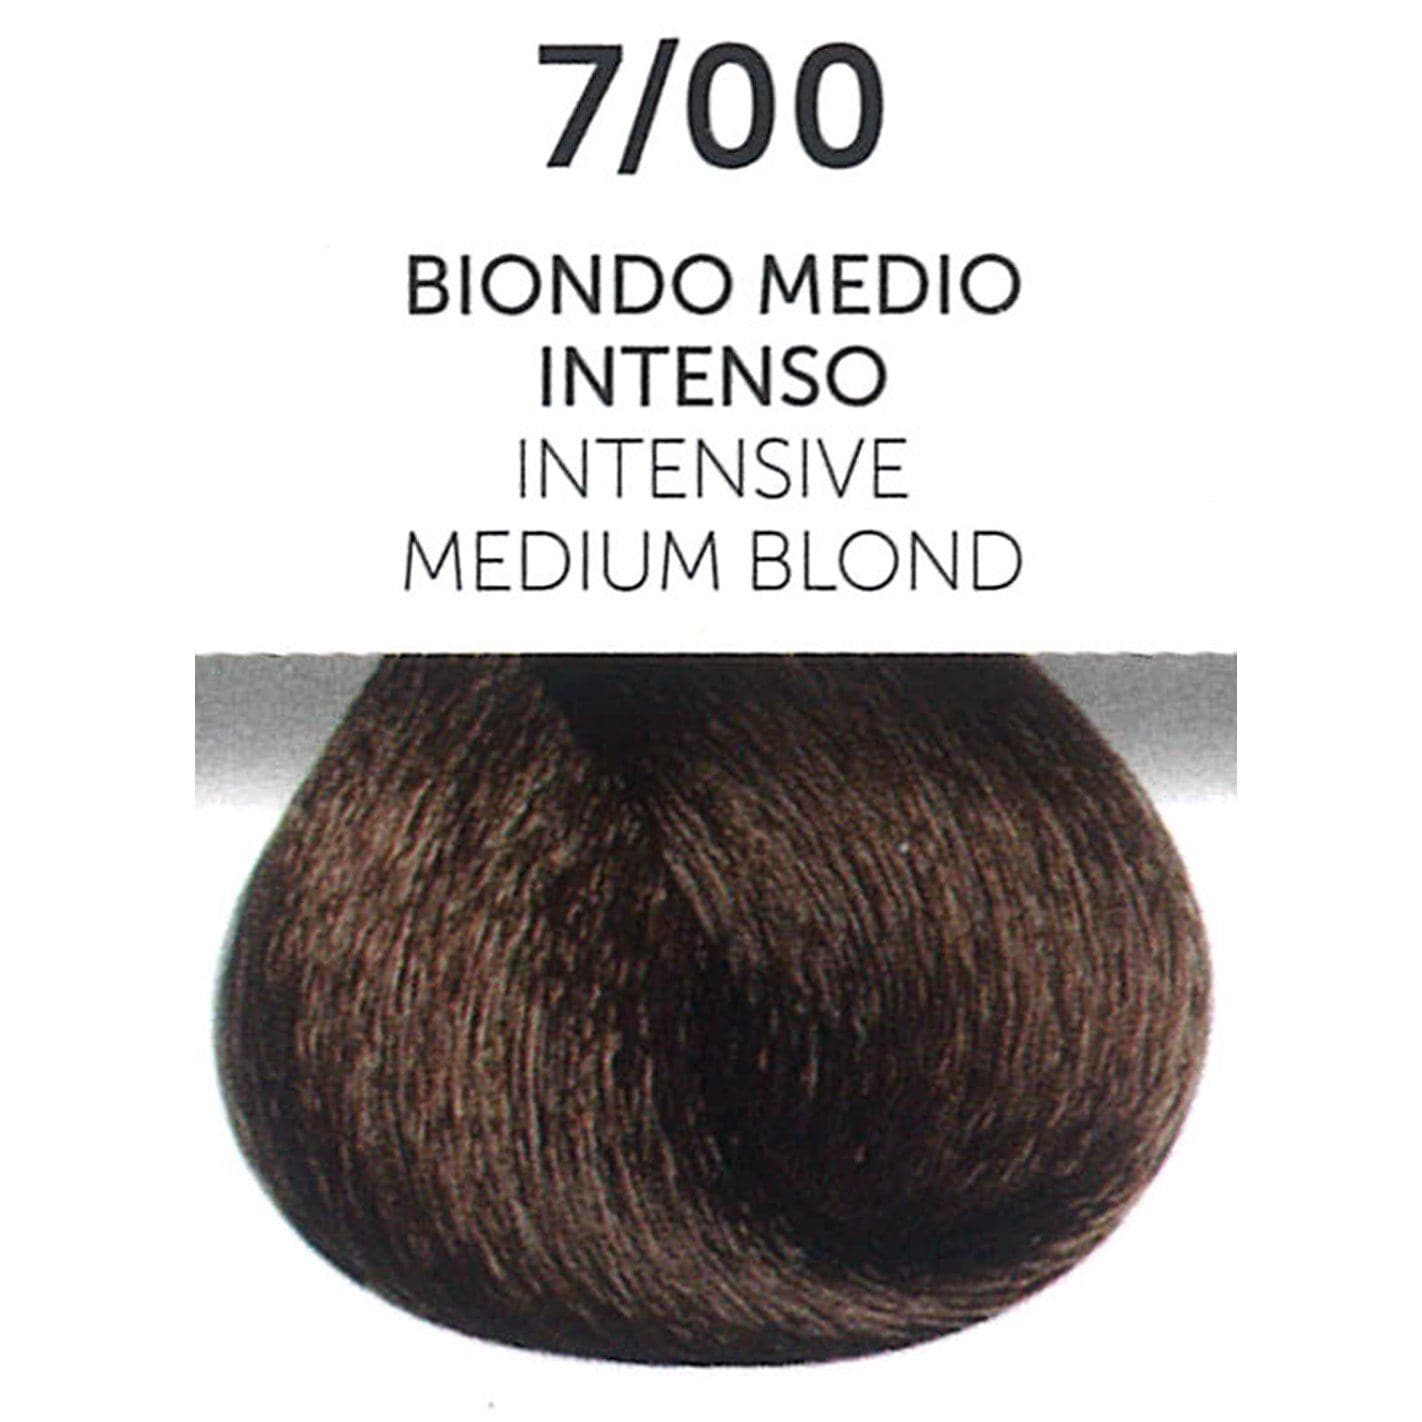 7/00 Intensive Medium Blond | Permanent Hair Color | Perlacolor - SH Salons